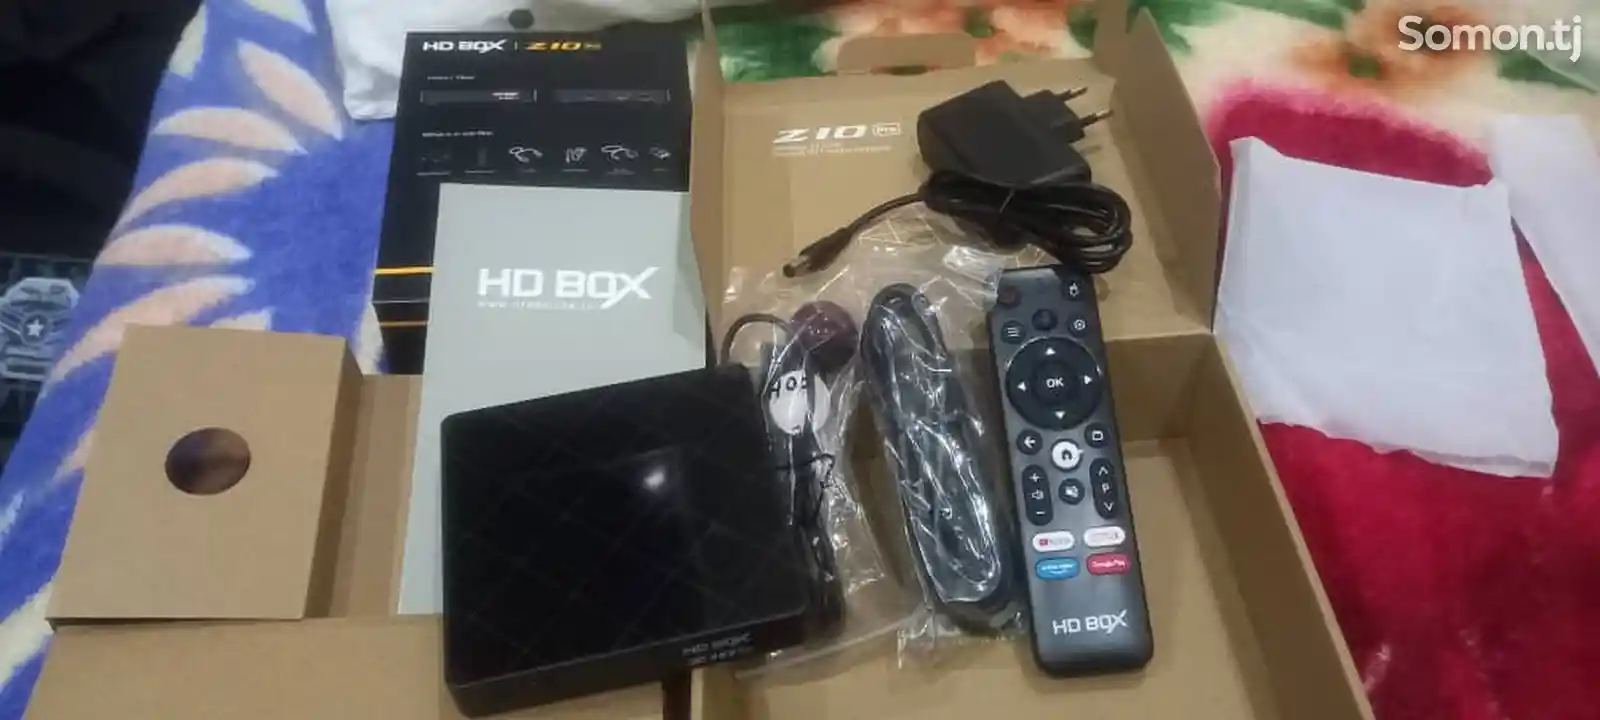 Ресивер HD BOX ZIO-2